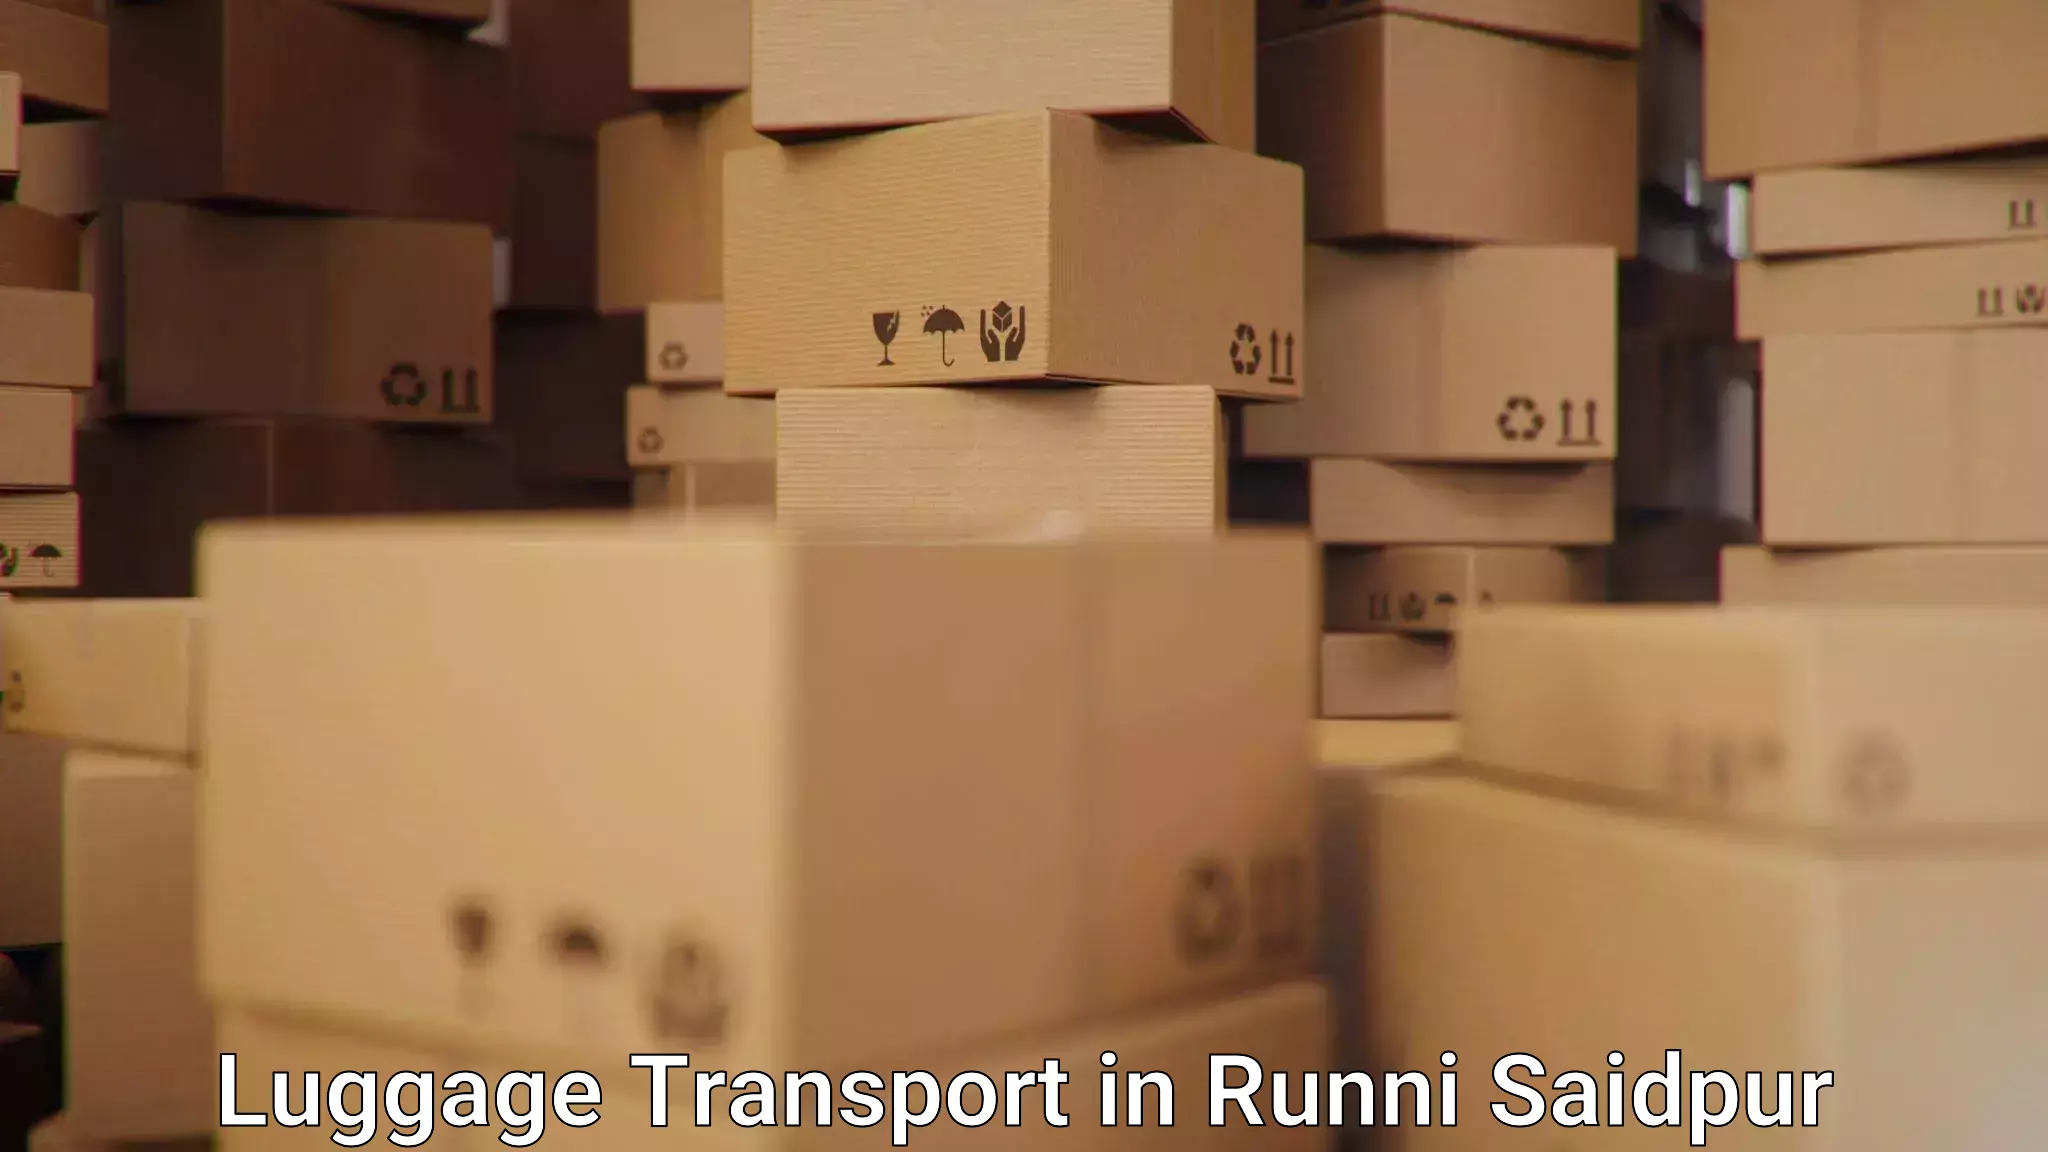 Luggage transport consultancy in Runni Saidpur